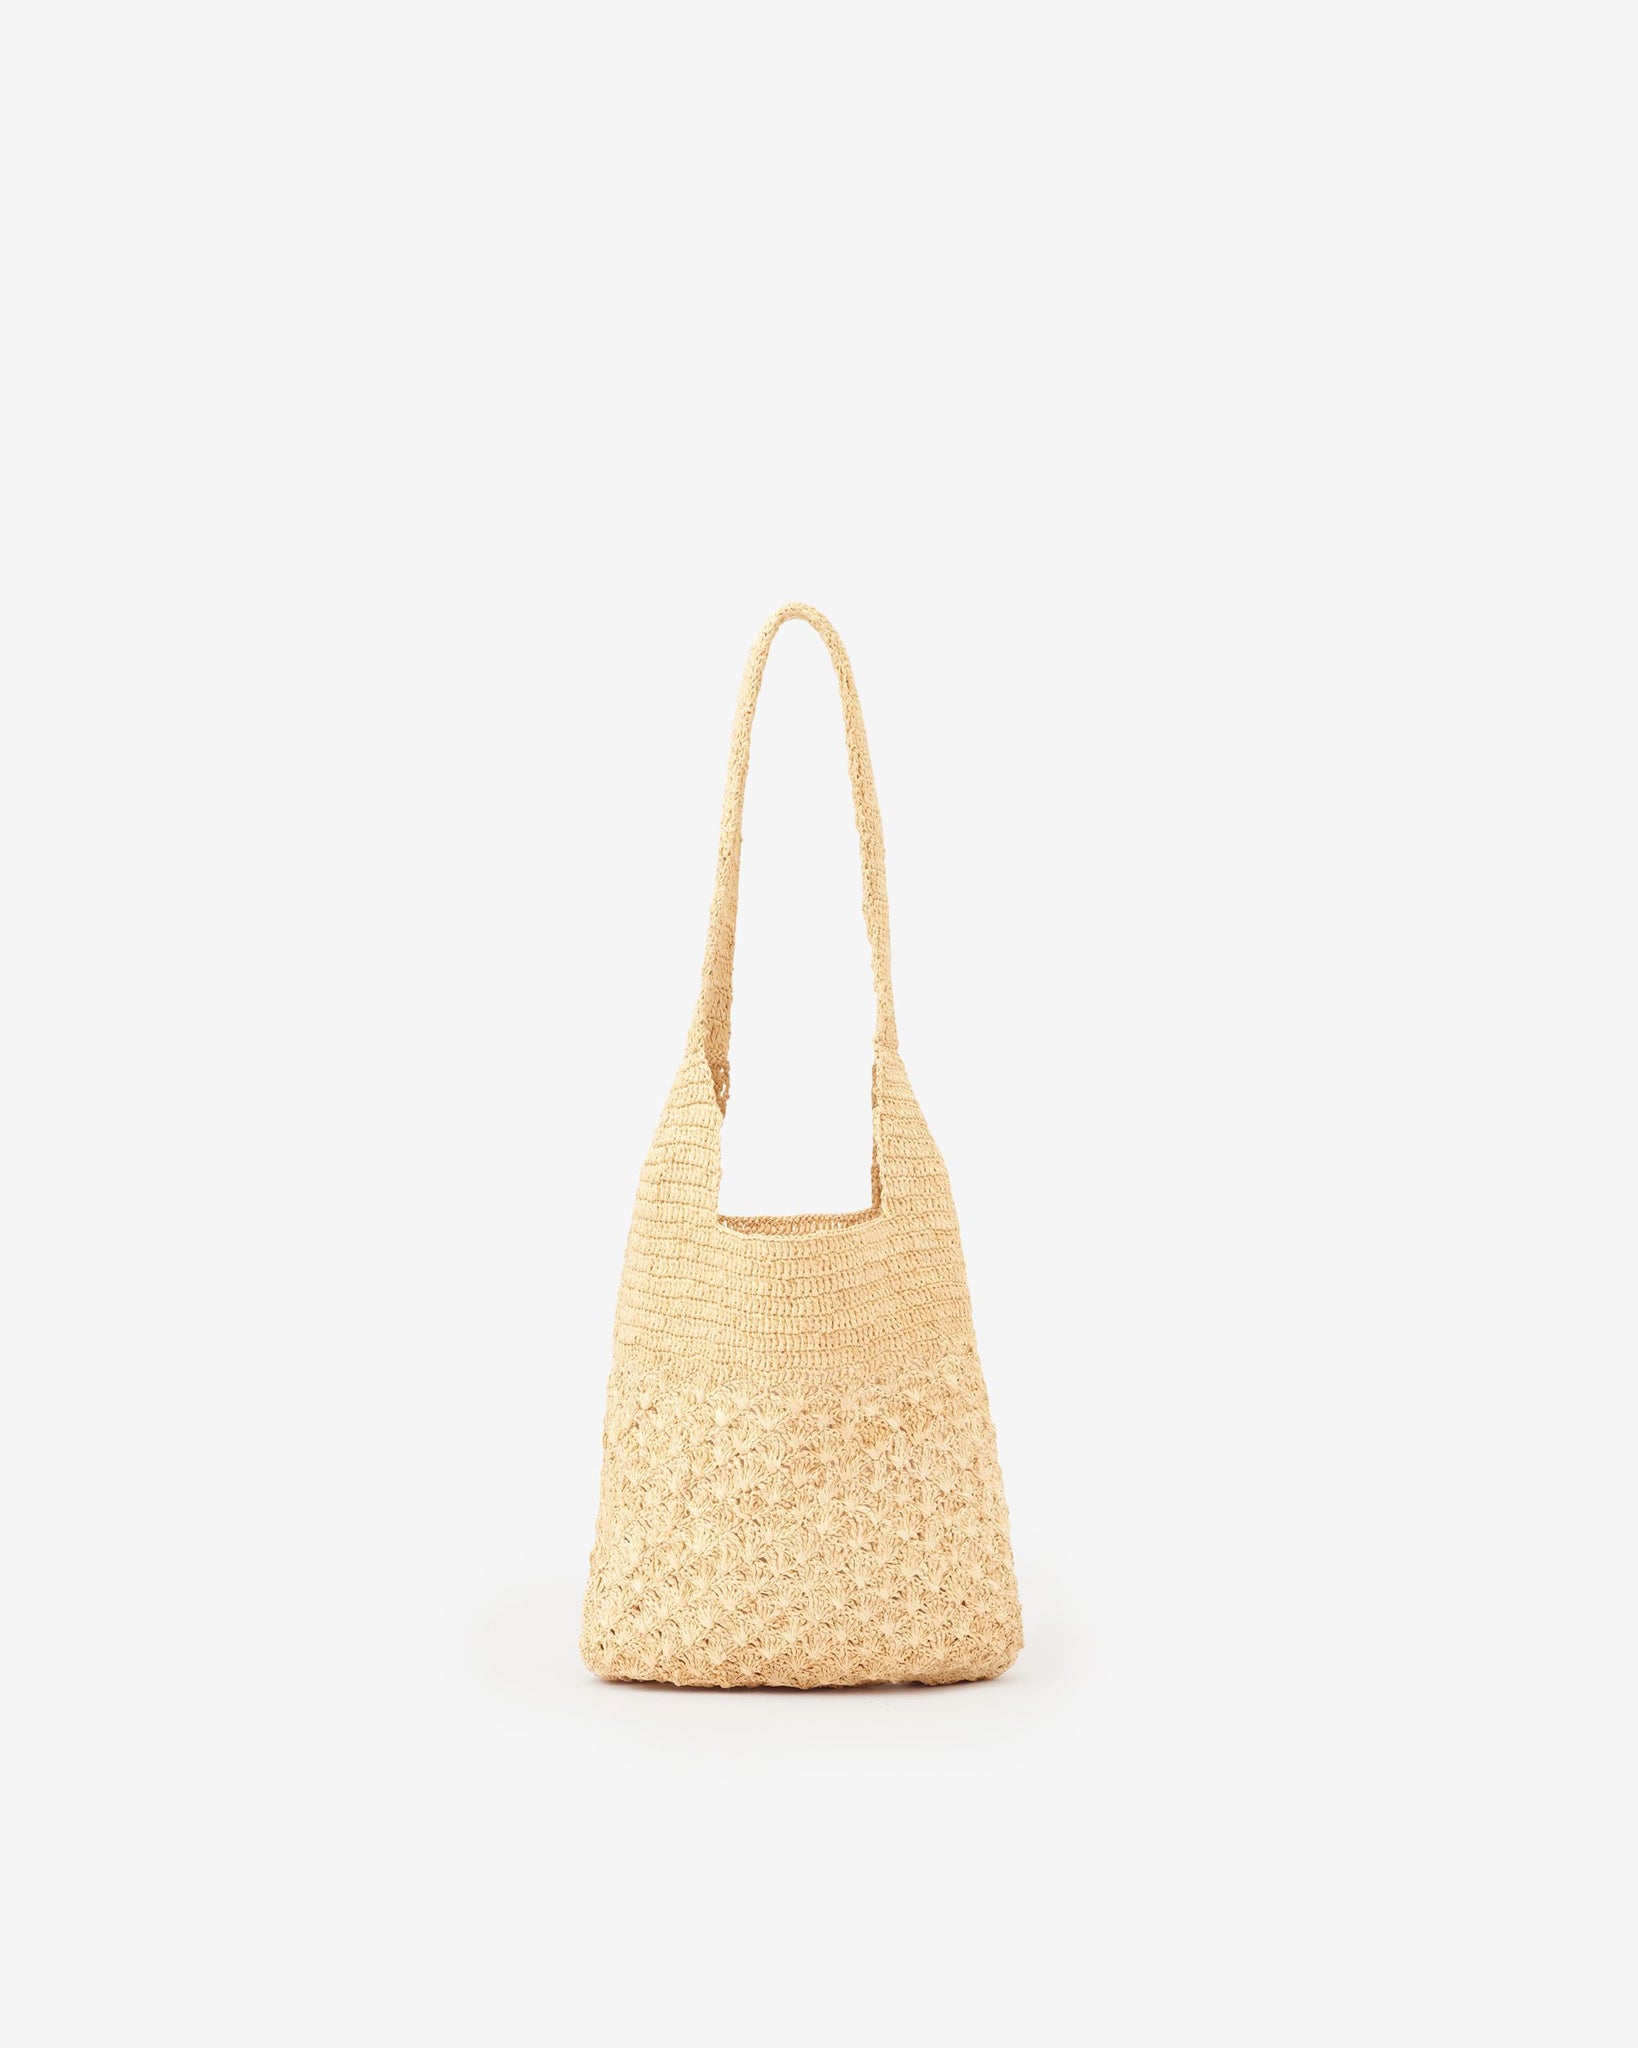 Praia small shoulder bag, natural